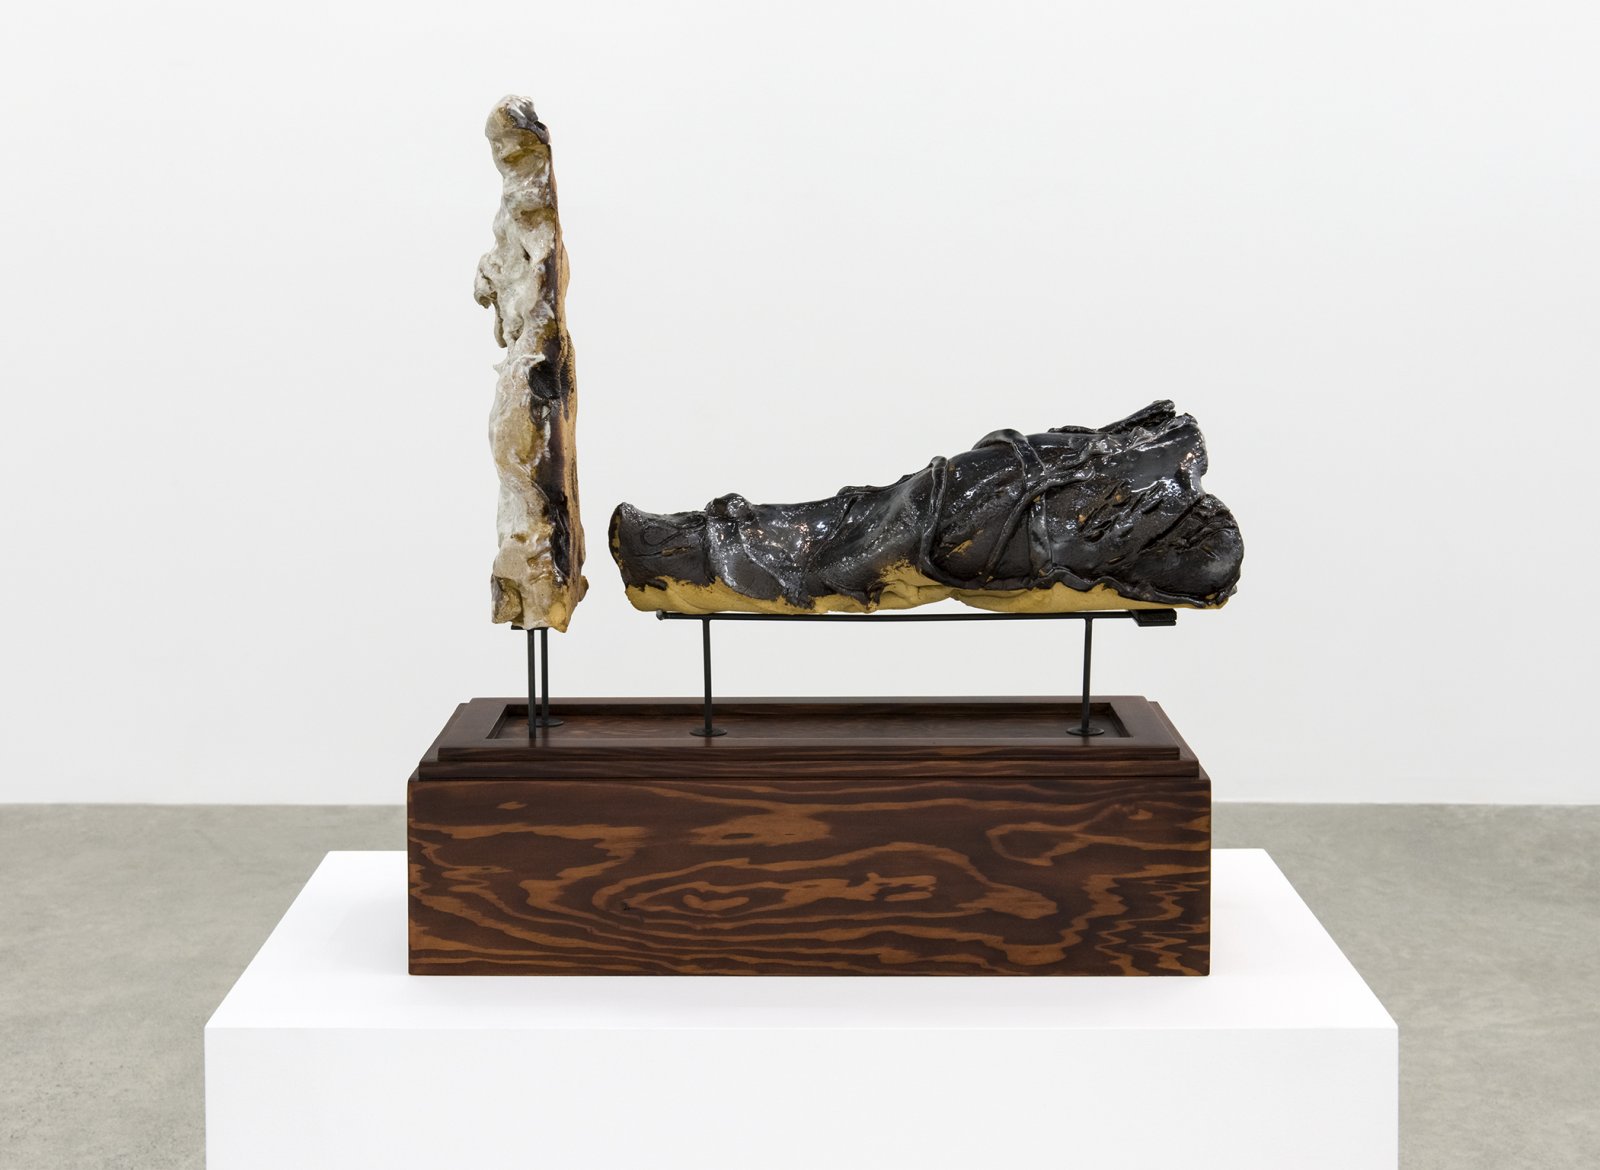 Damian Moppett, Figure with Shadow, 2016, glazed stoneware, wood, steel, 23 x 11 x 21 in. (57 x 27 x 53 cm) by Damian Moppett